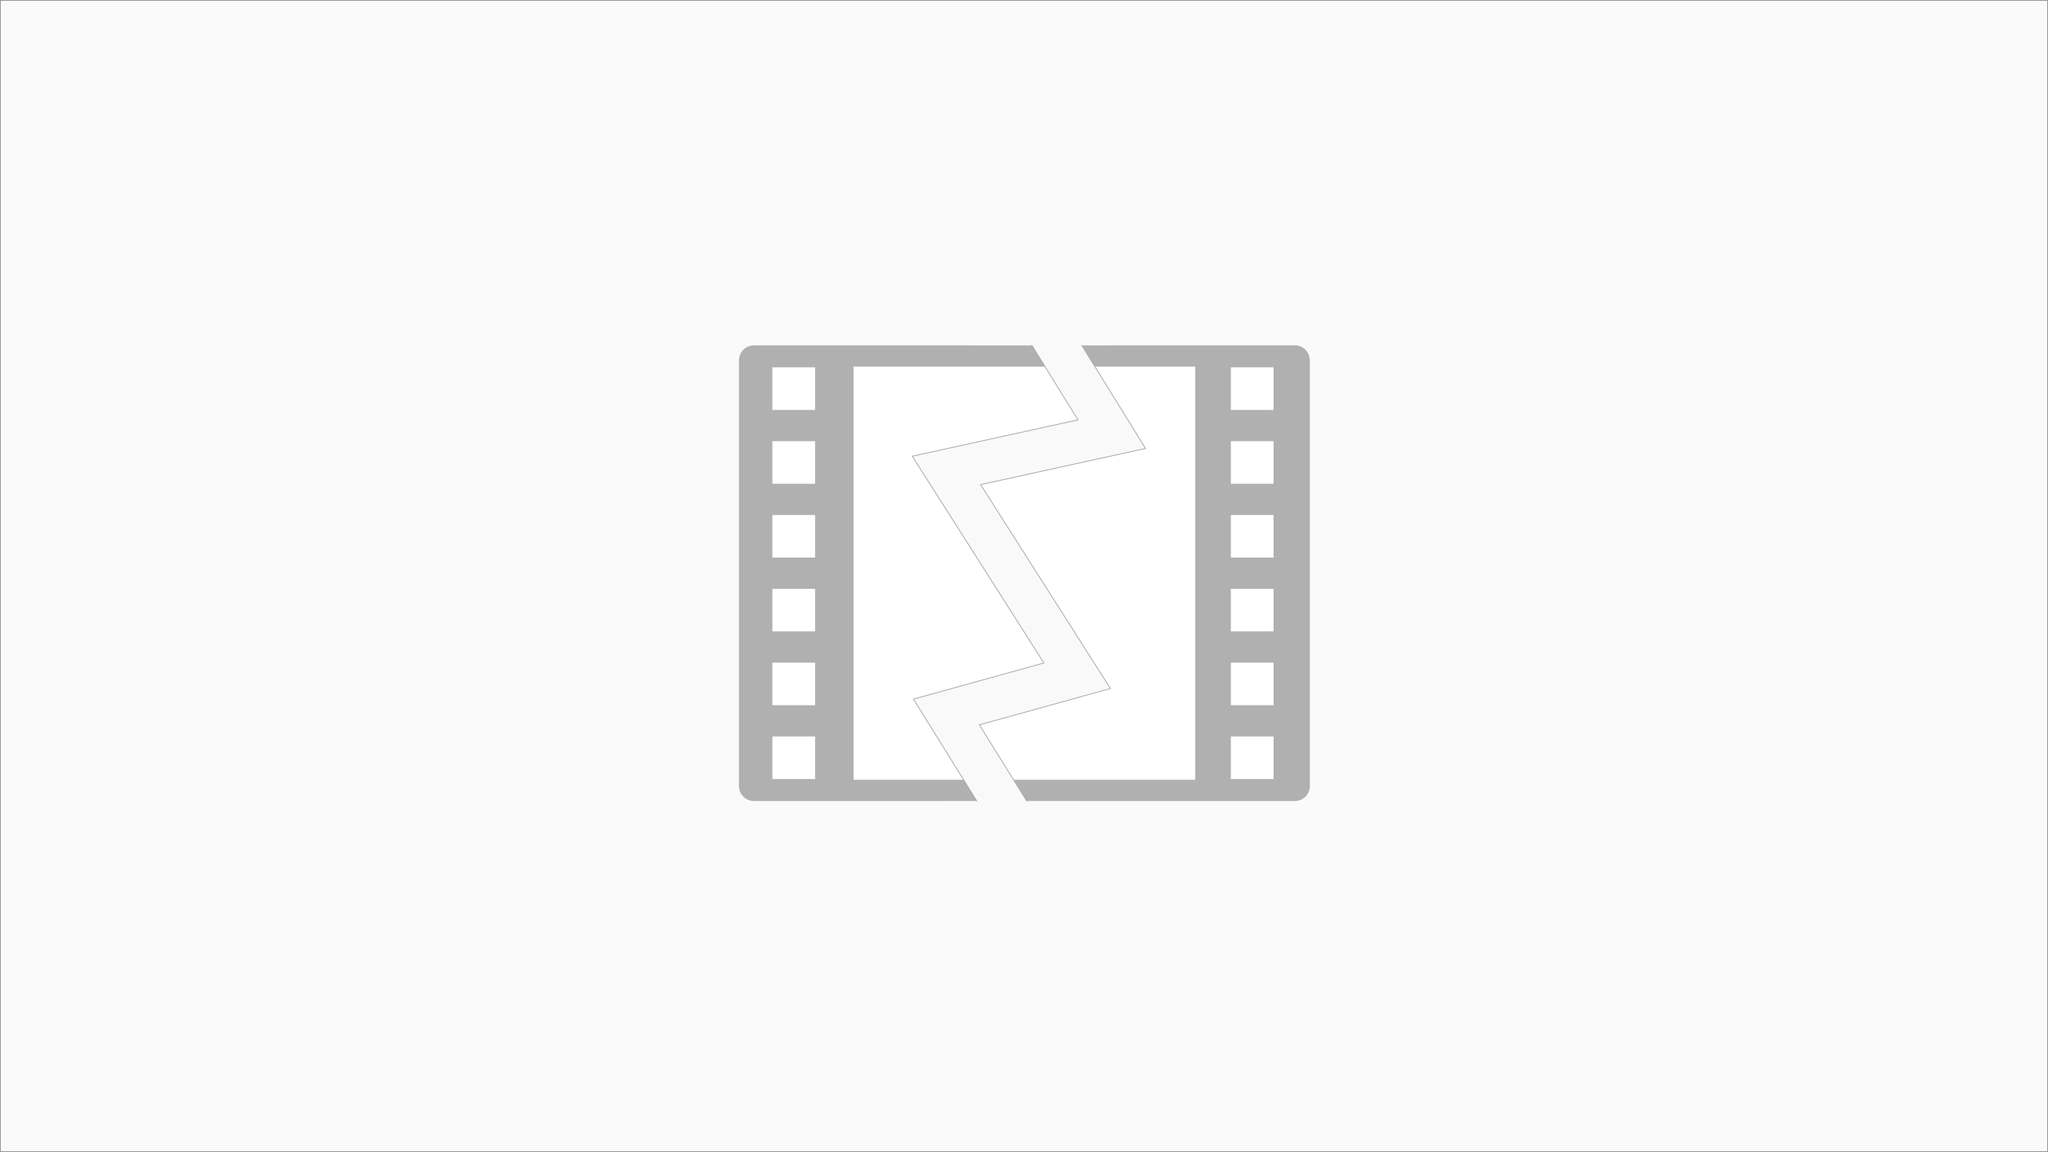 Watch this: Ellen Burstyn, Heather Graham, and Kiernan Shipka in a trailer for Lifetime's Flowers In The Attic remake